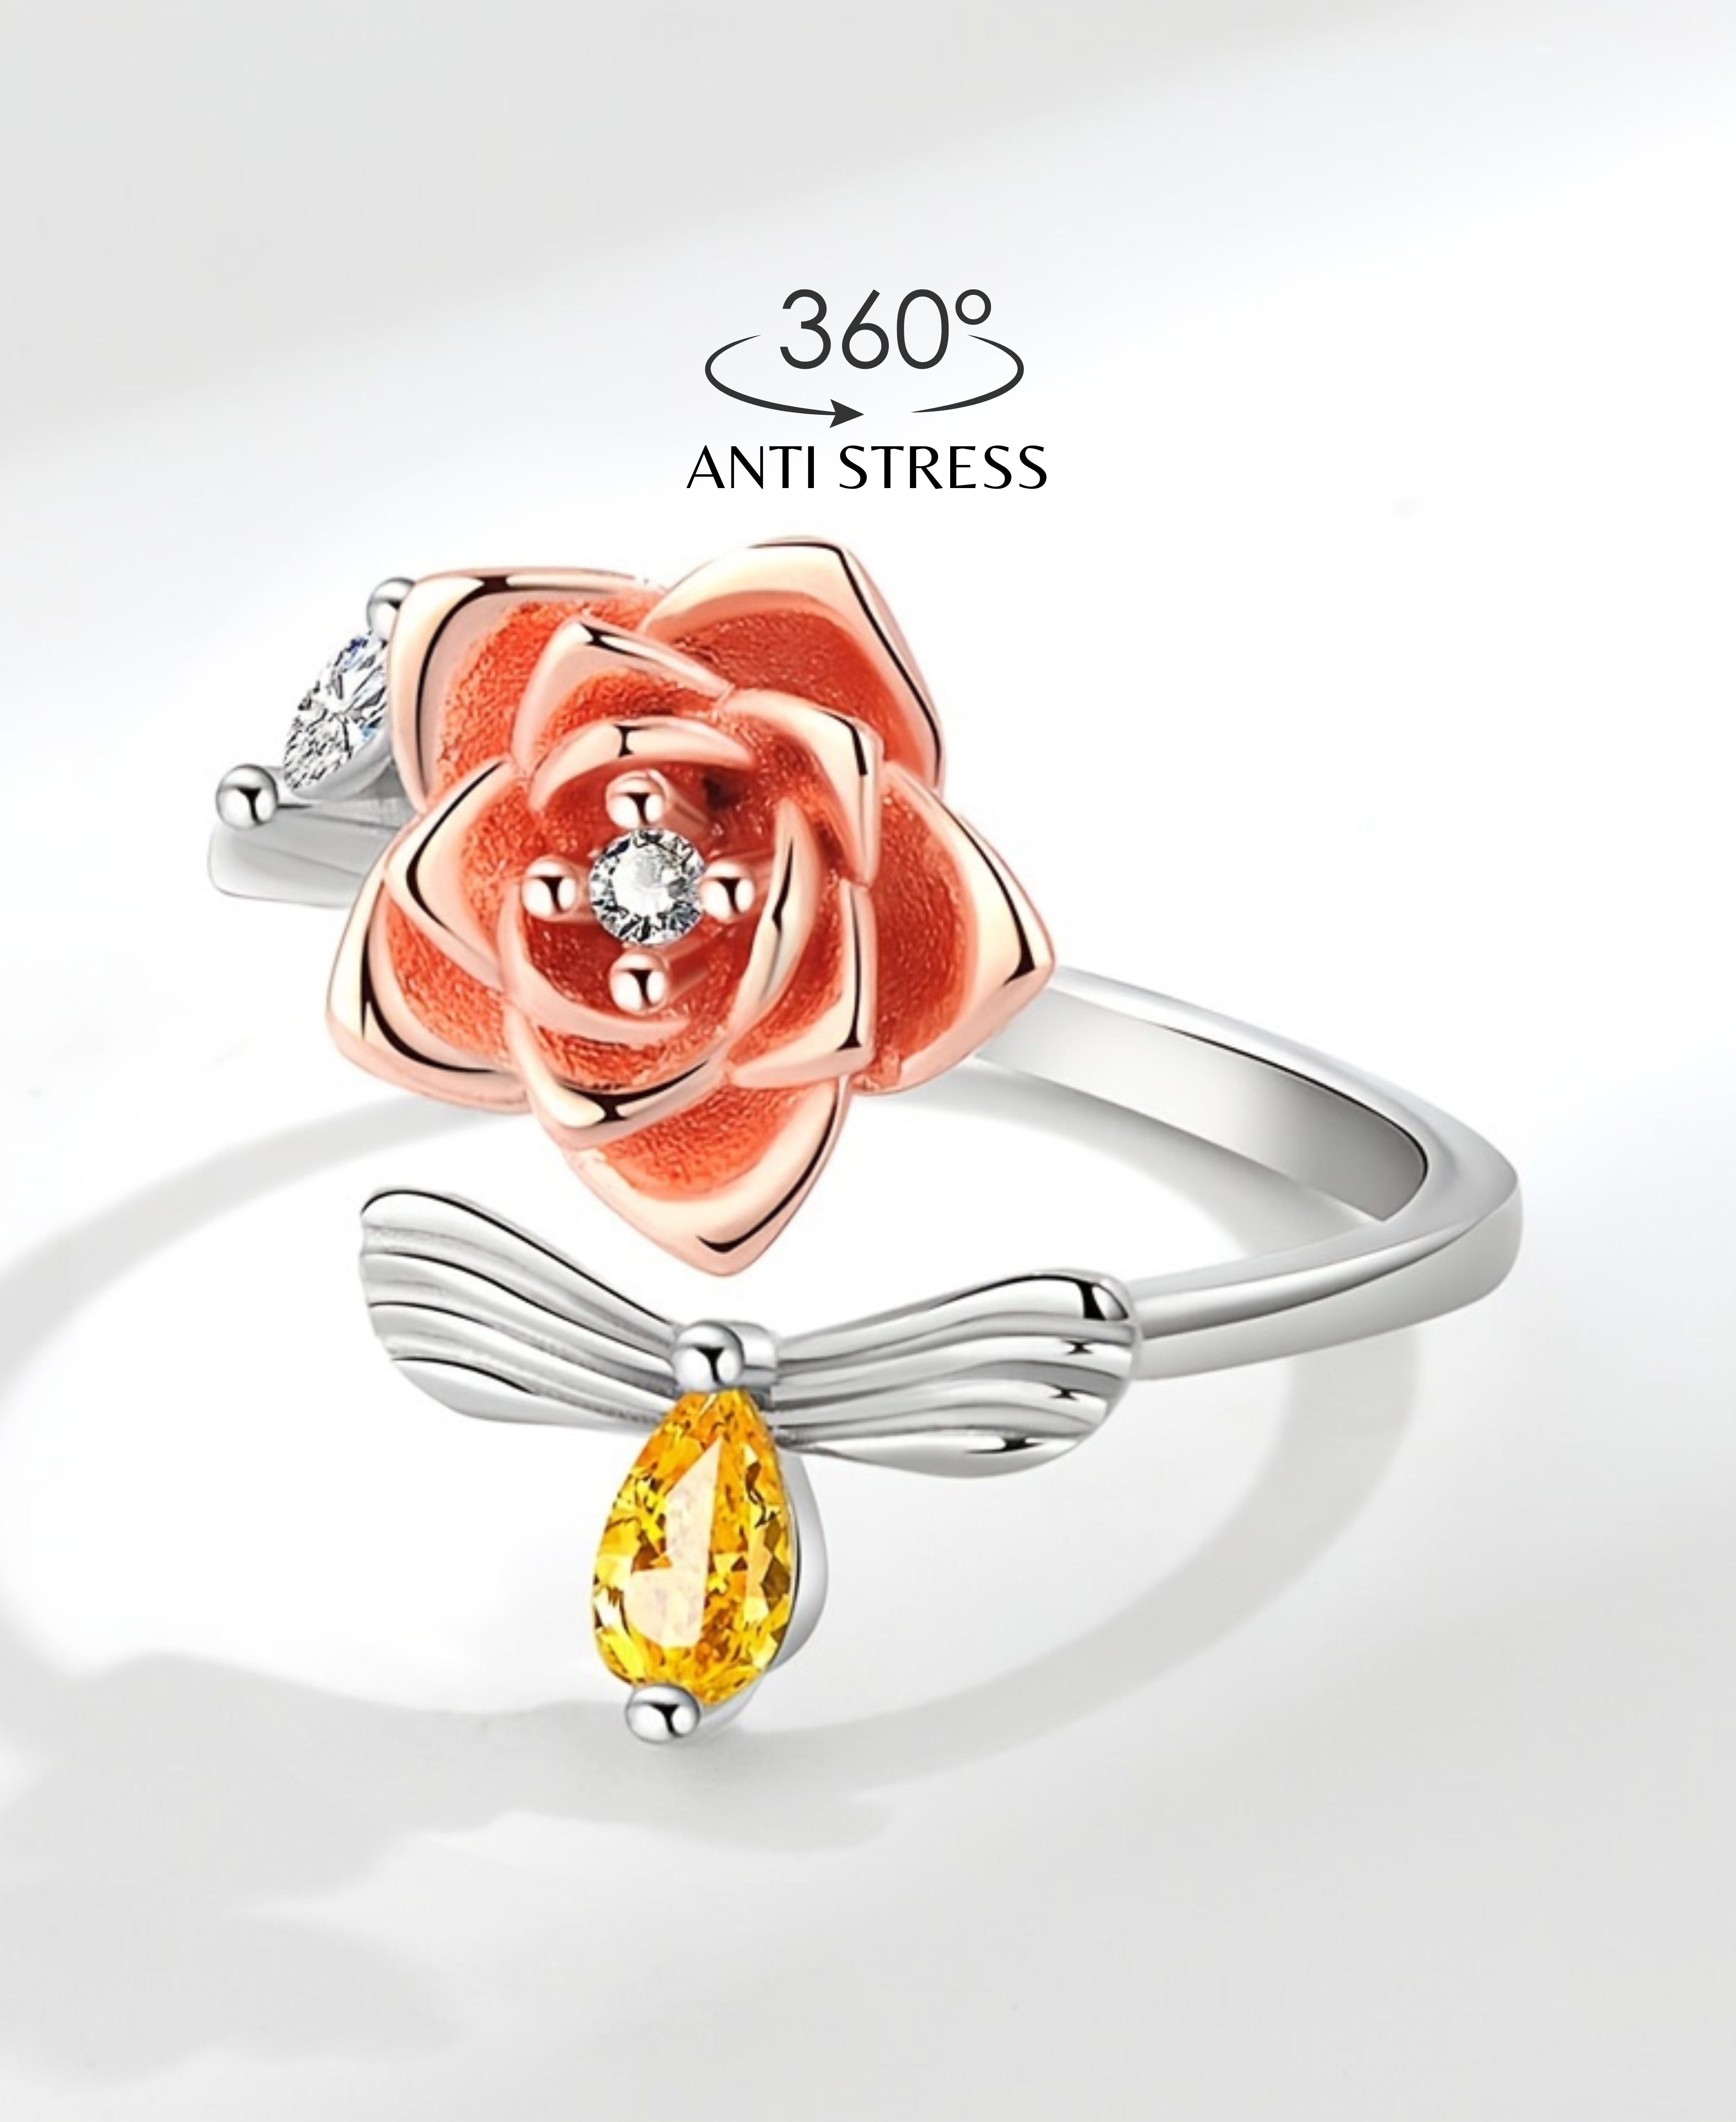 Blossom & Shine: The 'Flora' Ring 🌸